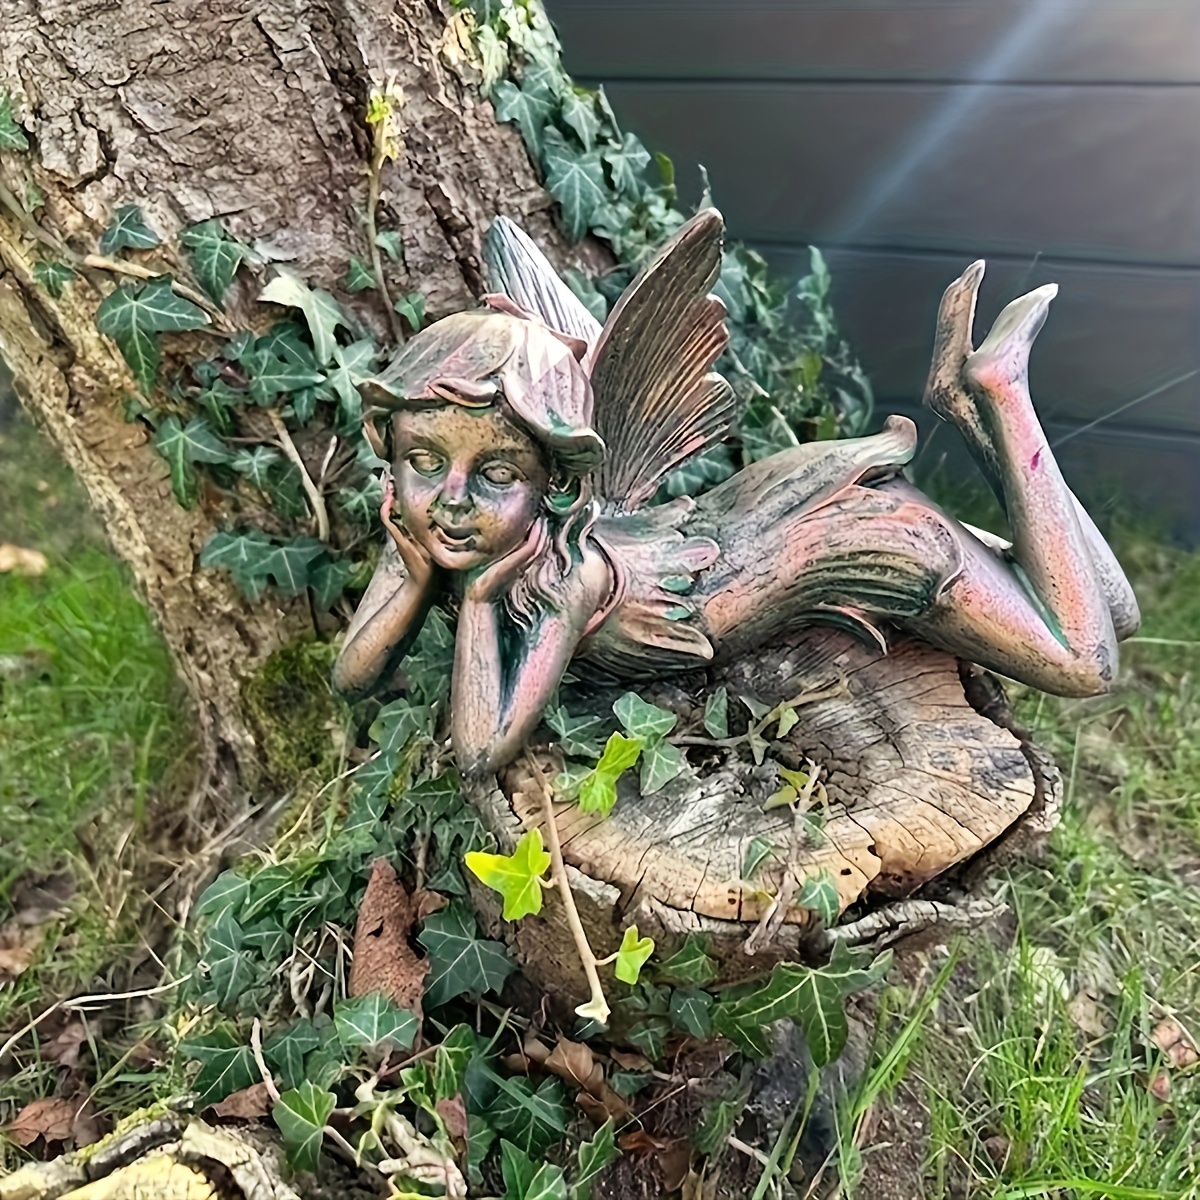 

1pc, New Resin Crafts Garden Playful Girl Angel Fairytale Sculpture Outdoor Statues And Sculptures Patio Home Decorations, Yard Decor, Garden Decor